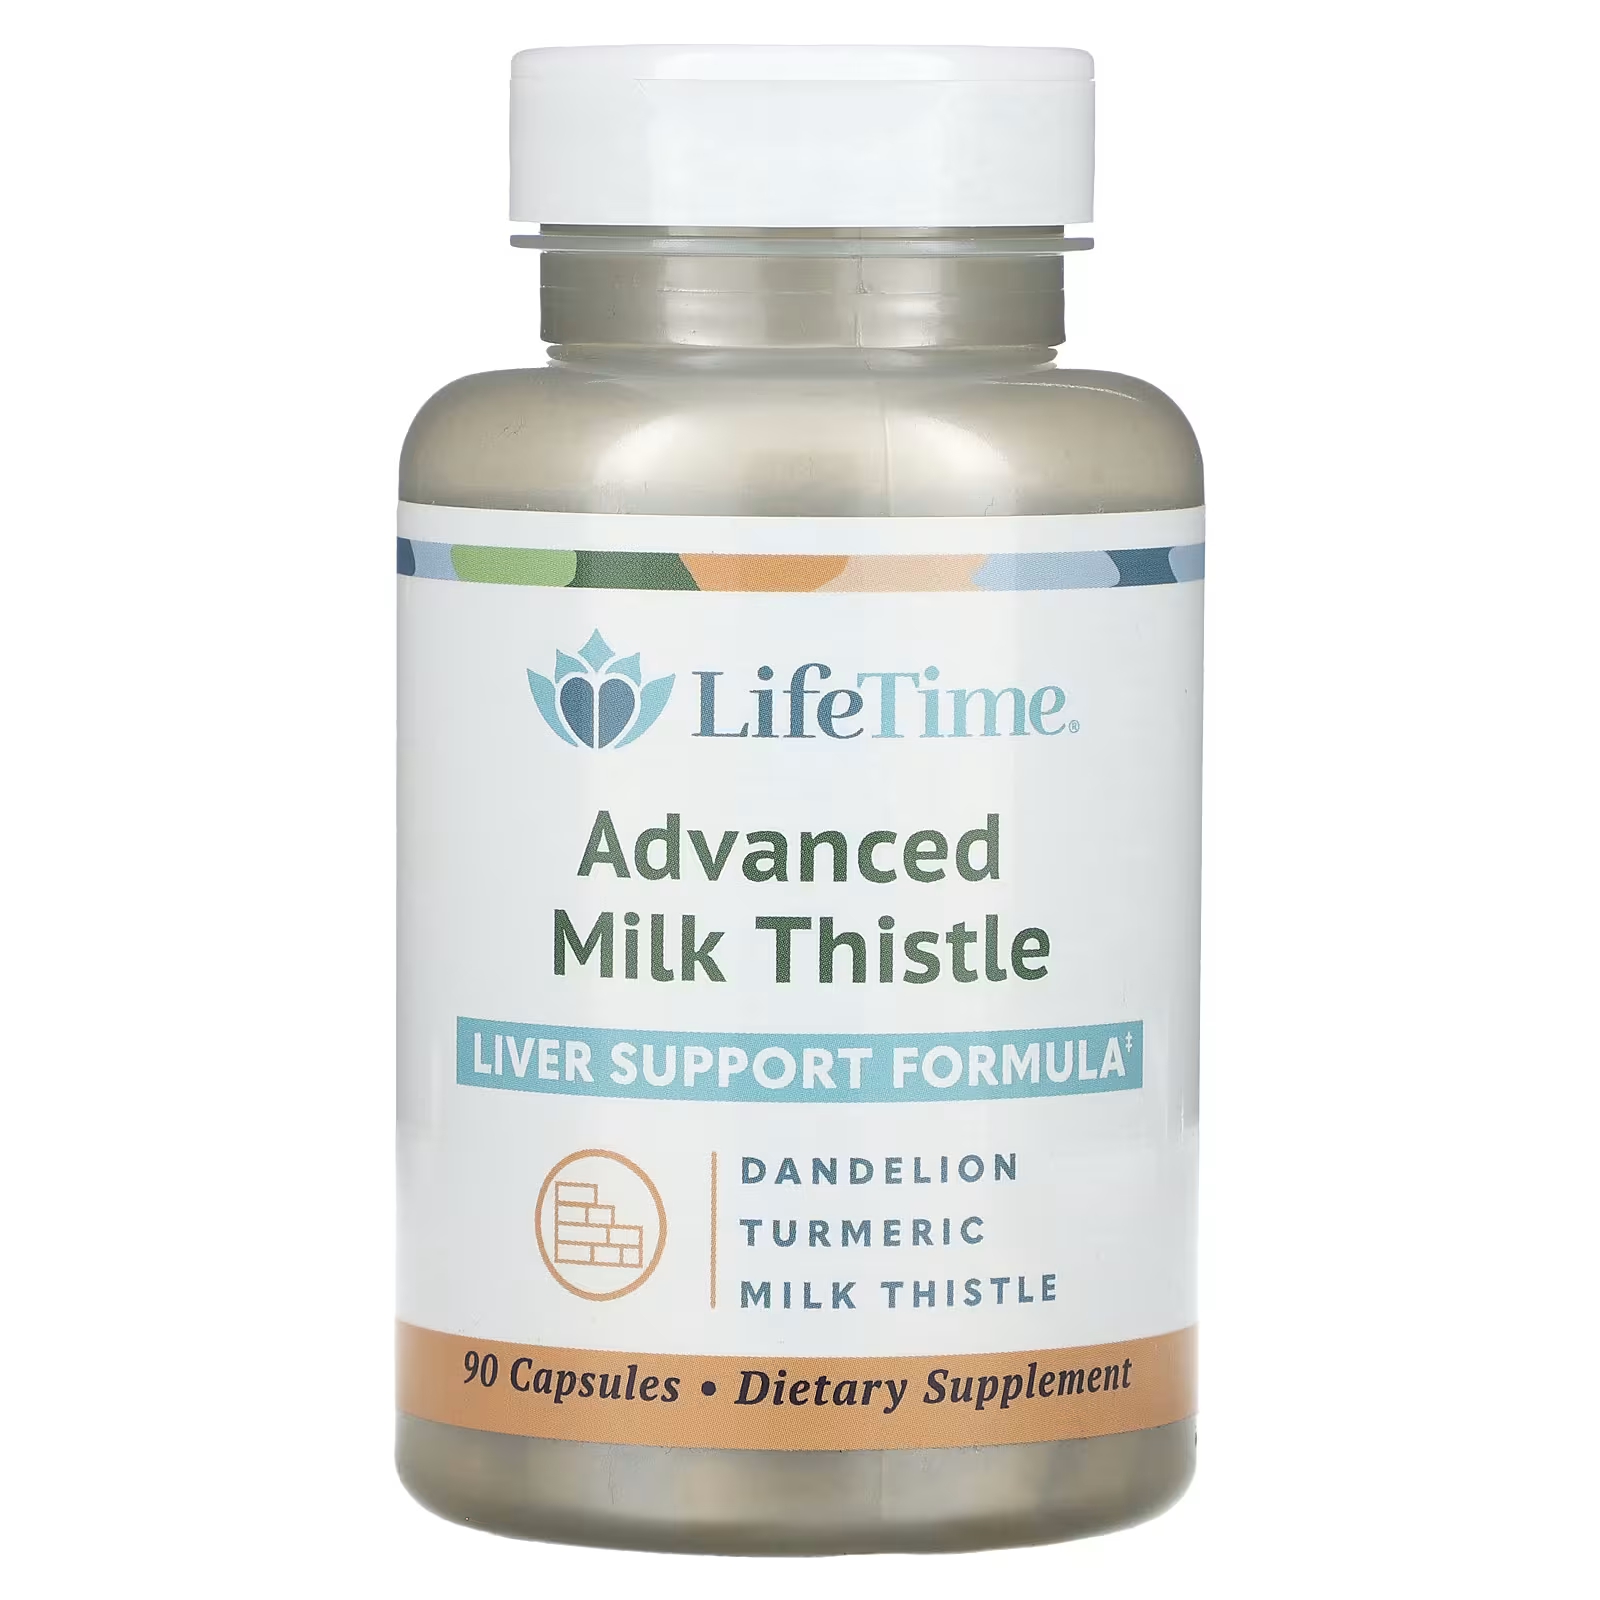 lifetime lifetime сша усилитель кровли для пластикового сарая lifetime 8 дюймов LifeTime Витамины Advanced расторопша 90 капсул LifeTime Vitamins